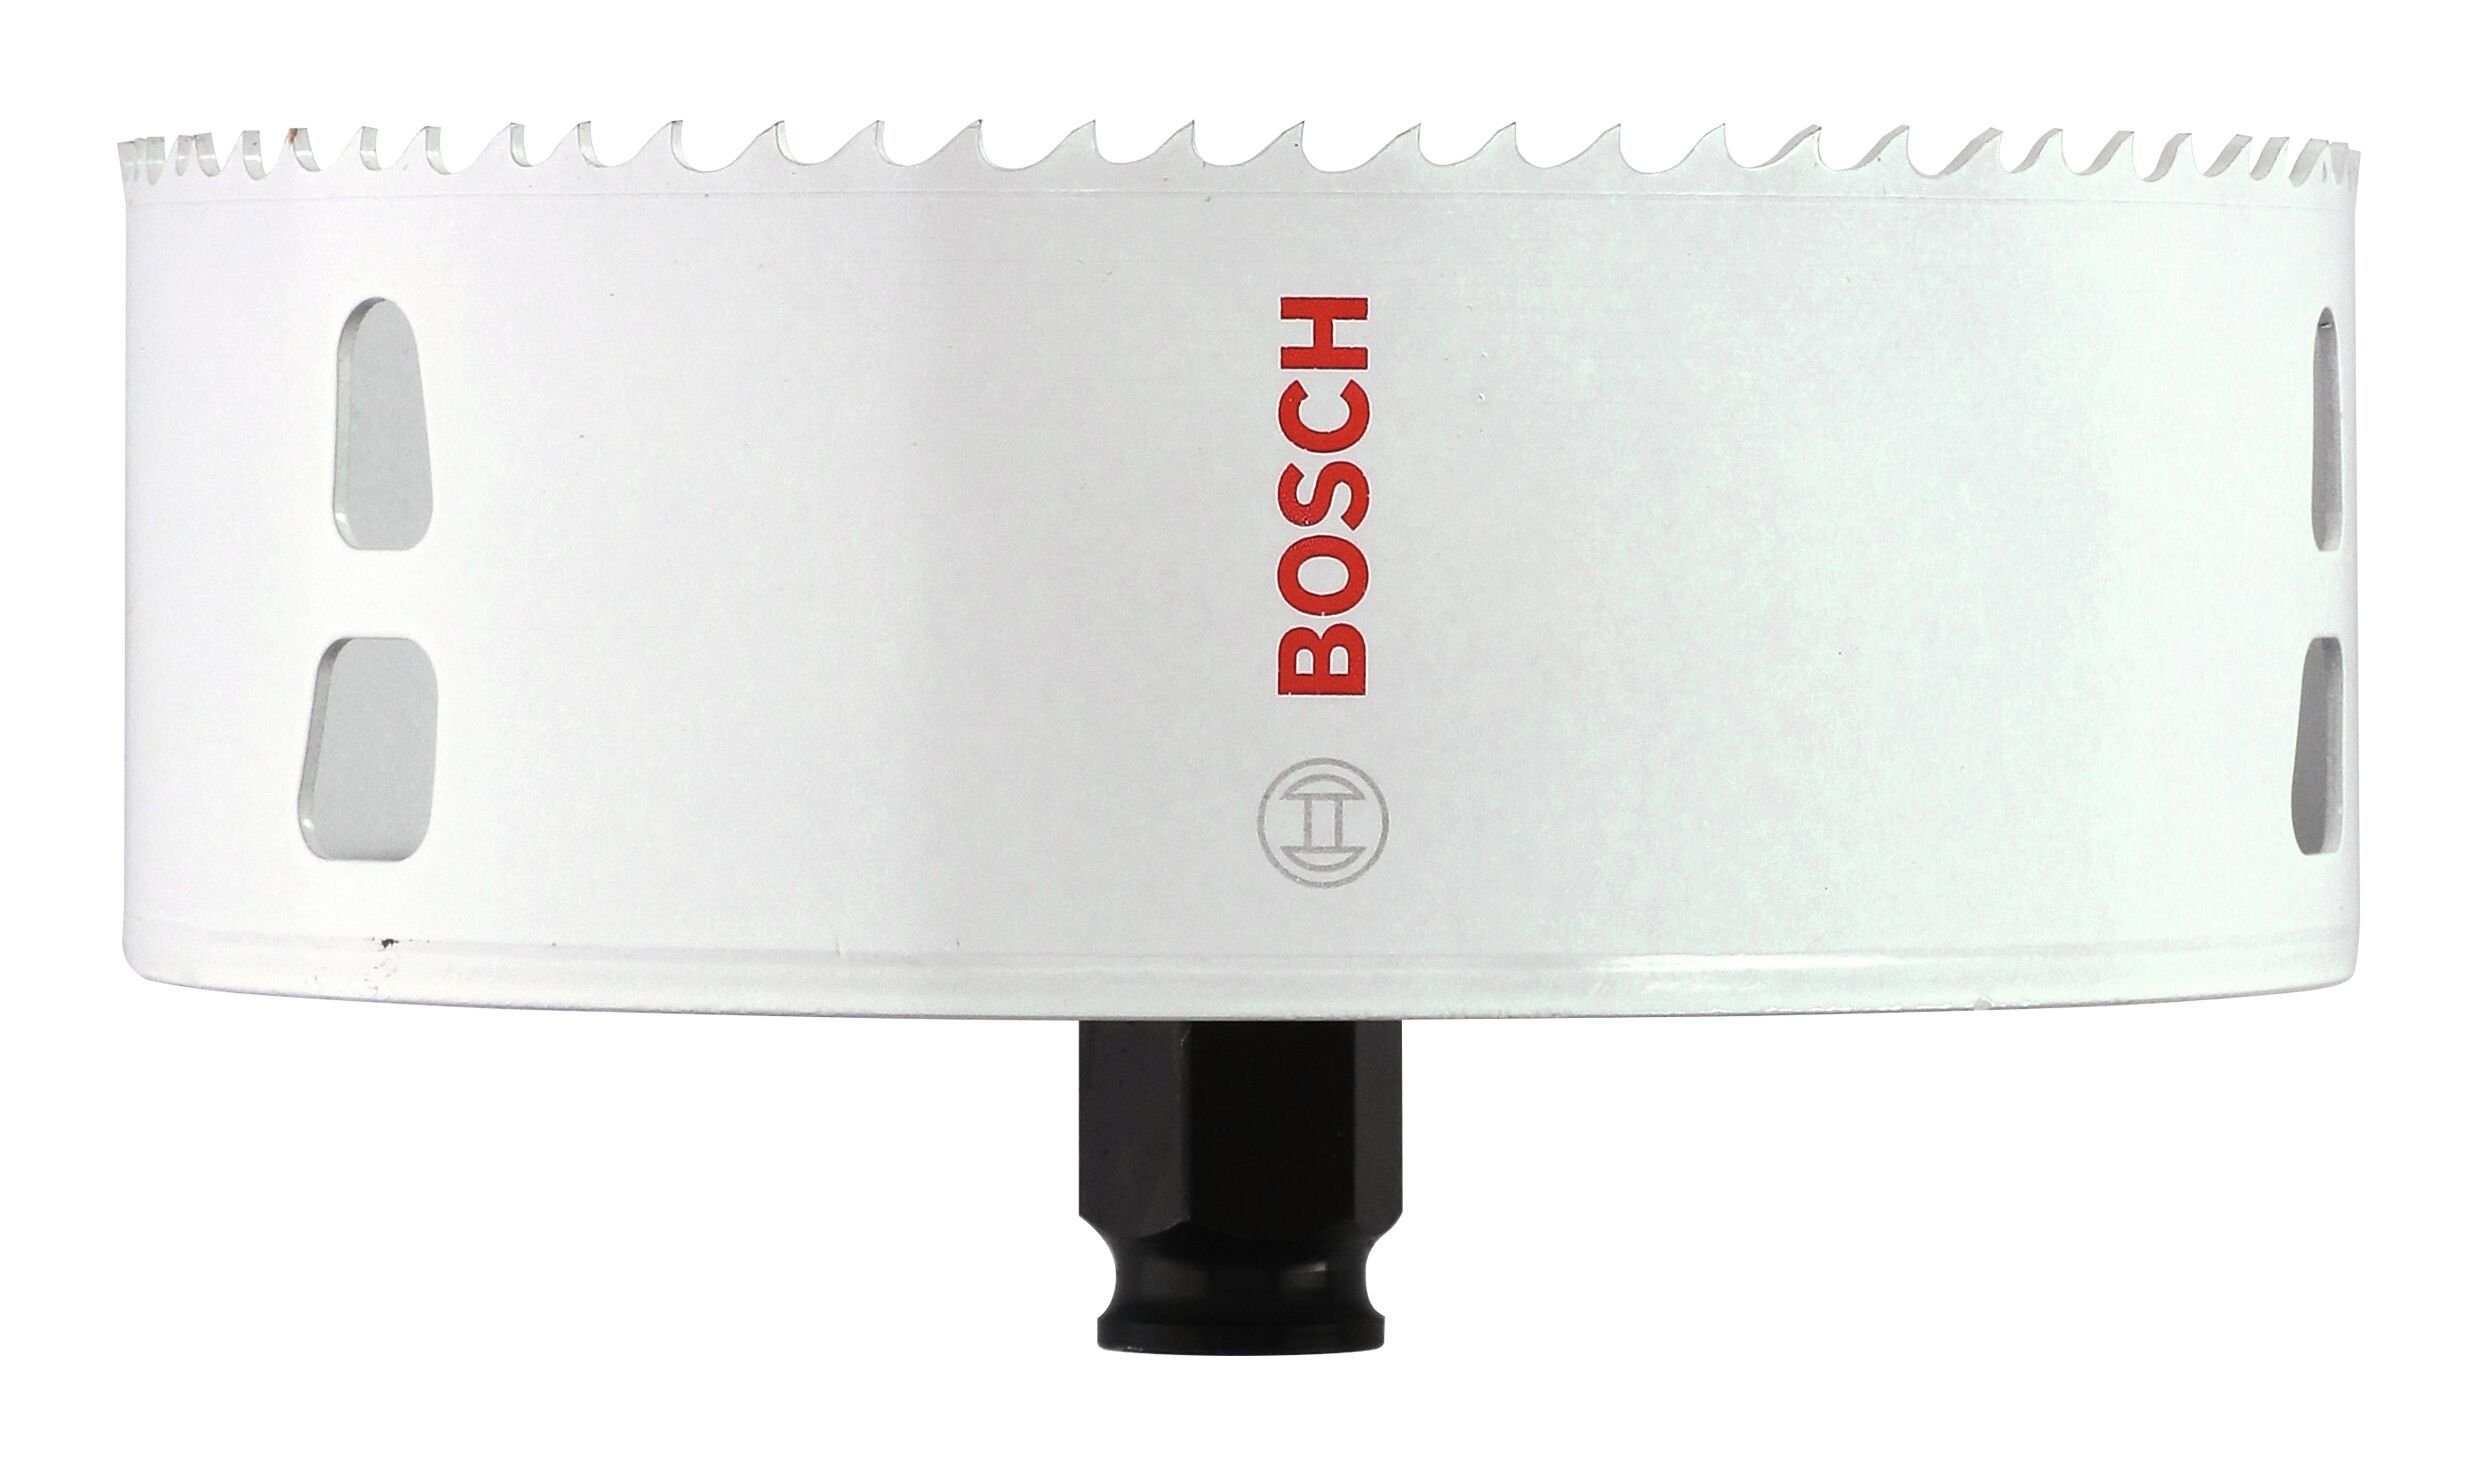 BOSCH Lochsäge, Ø 133 mm, Progressor for Wood and Metal